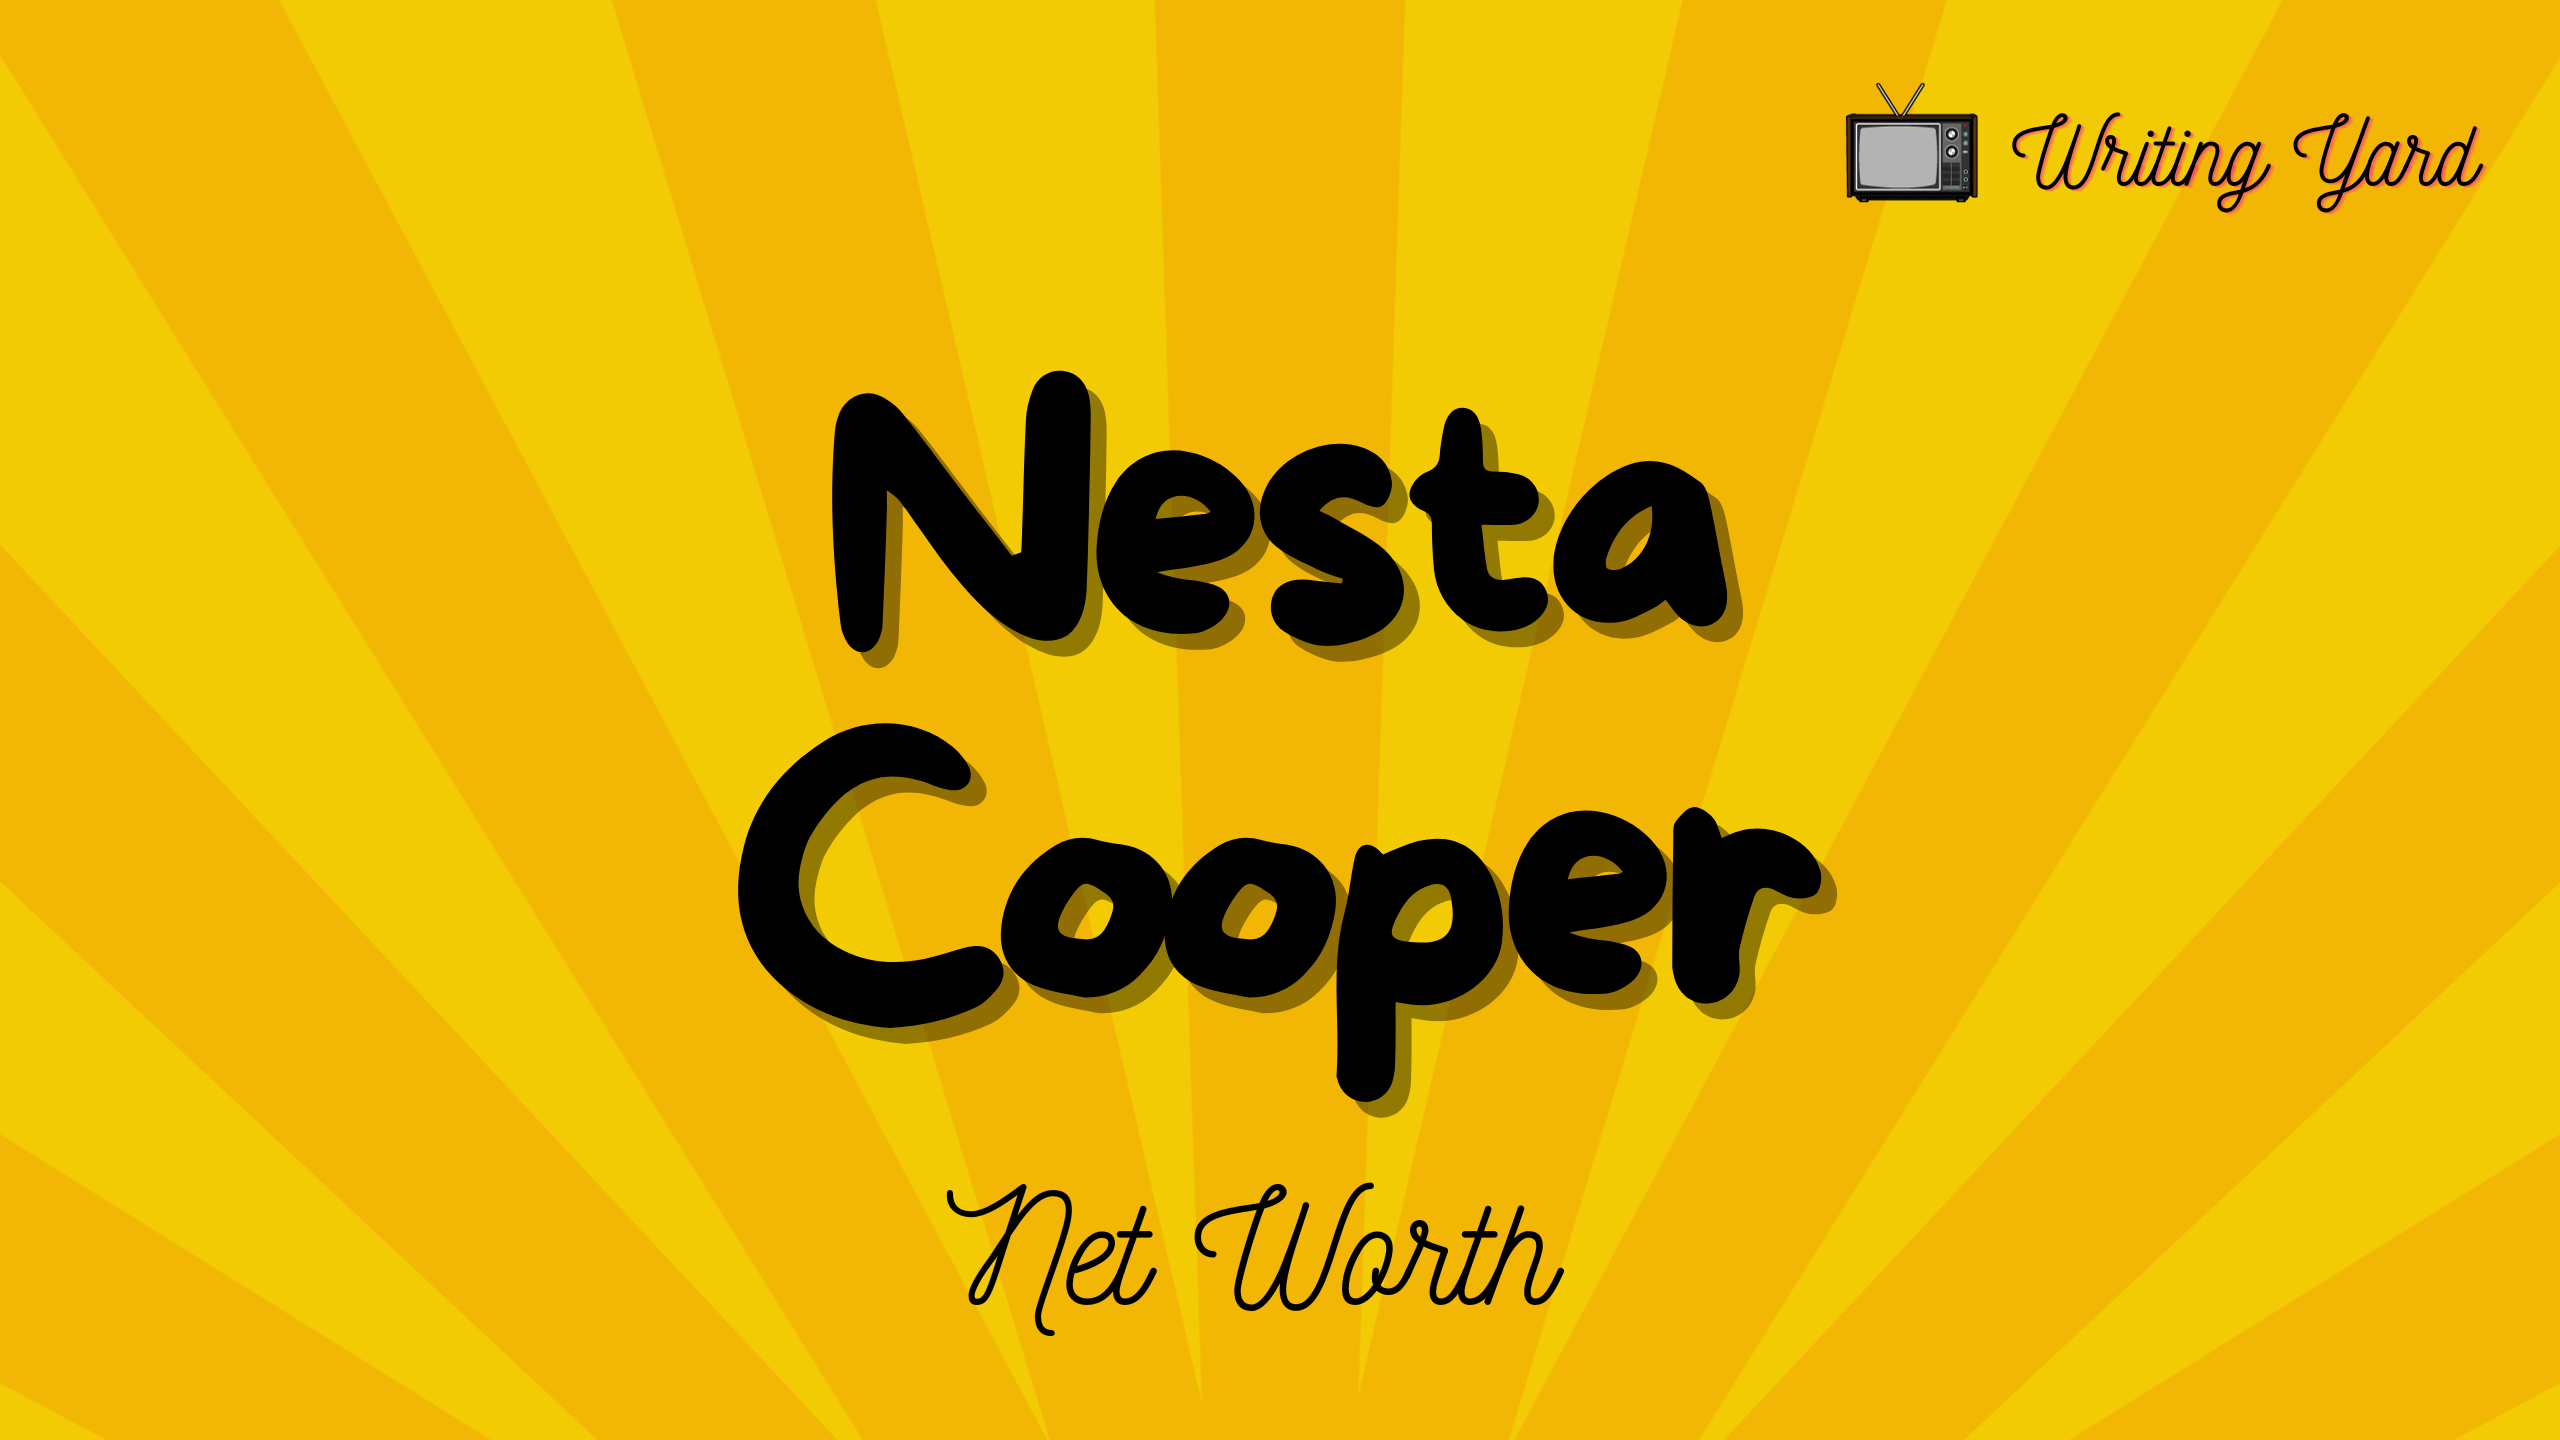 Nesta Cooper Net Worth